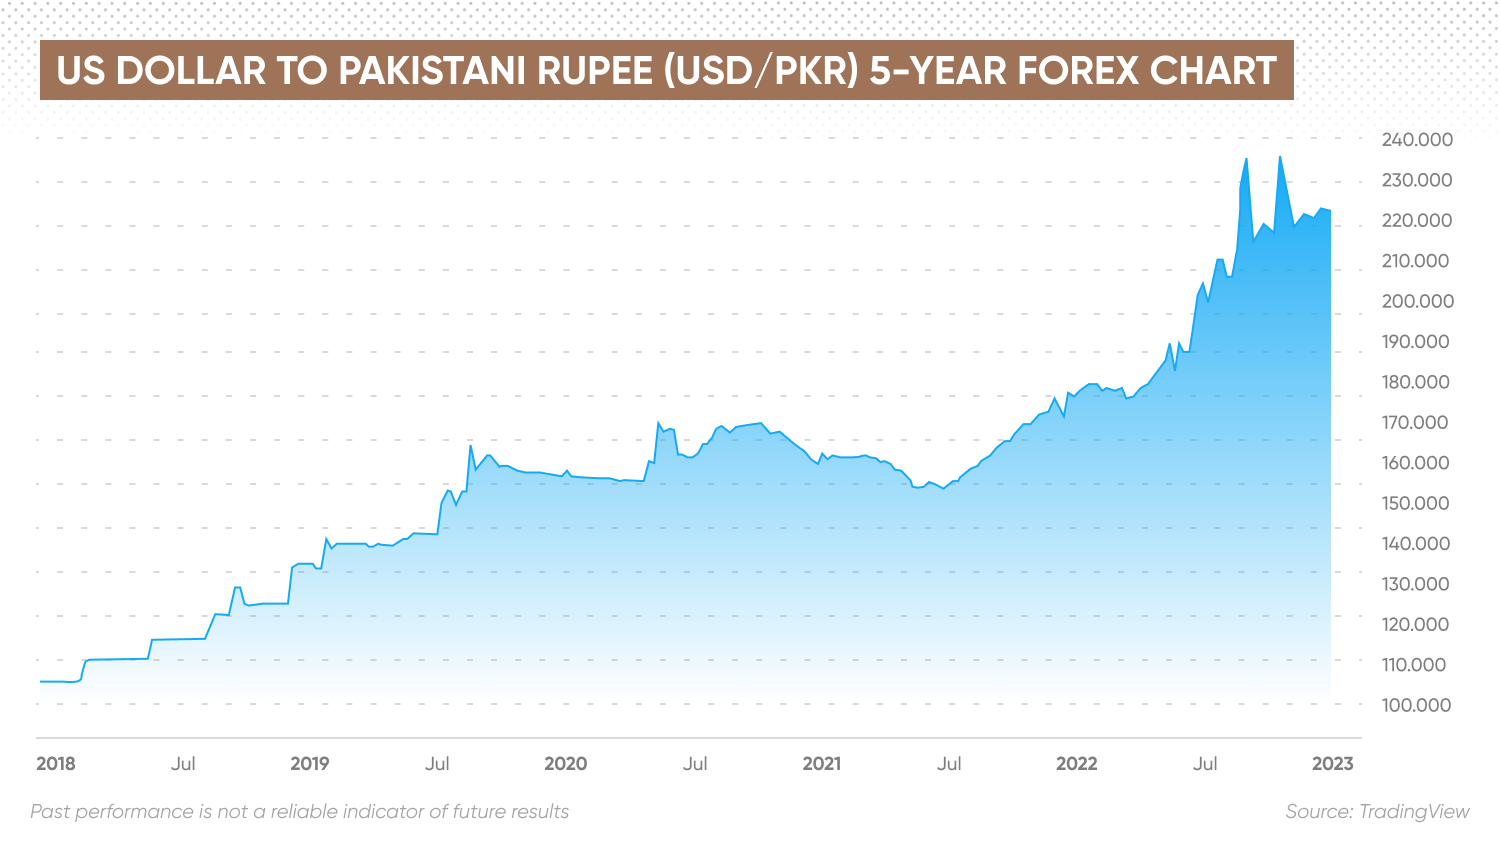 US dollar to Pakistani rupee (USD/PKR) 5-year forex chart